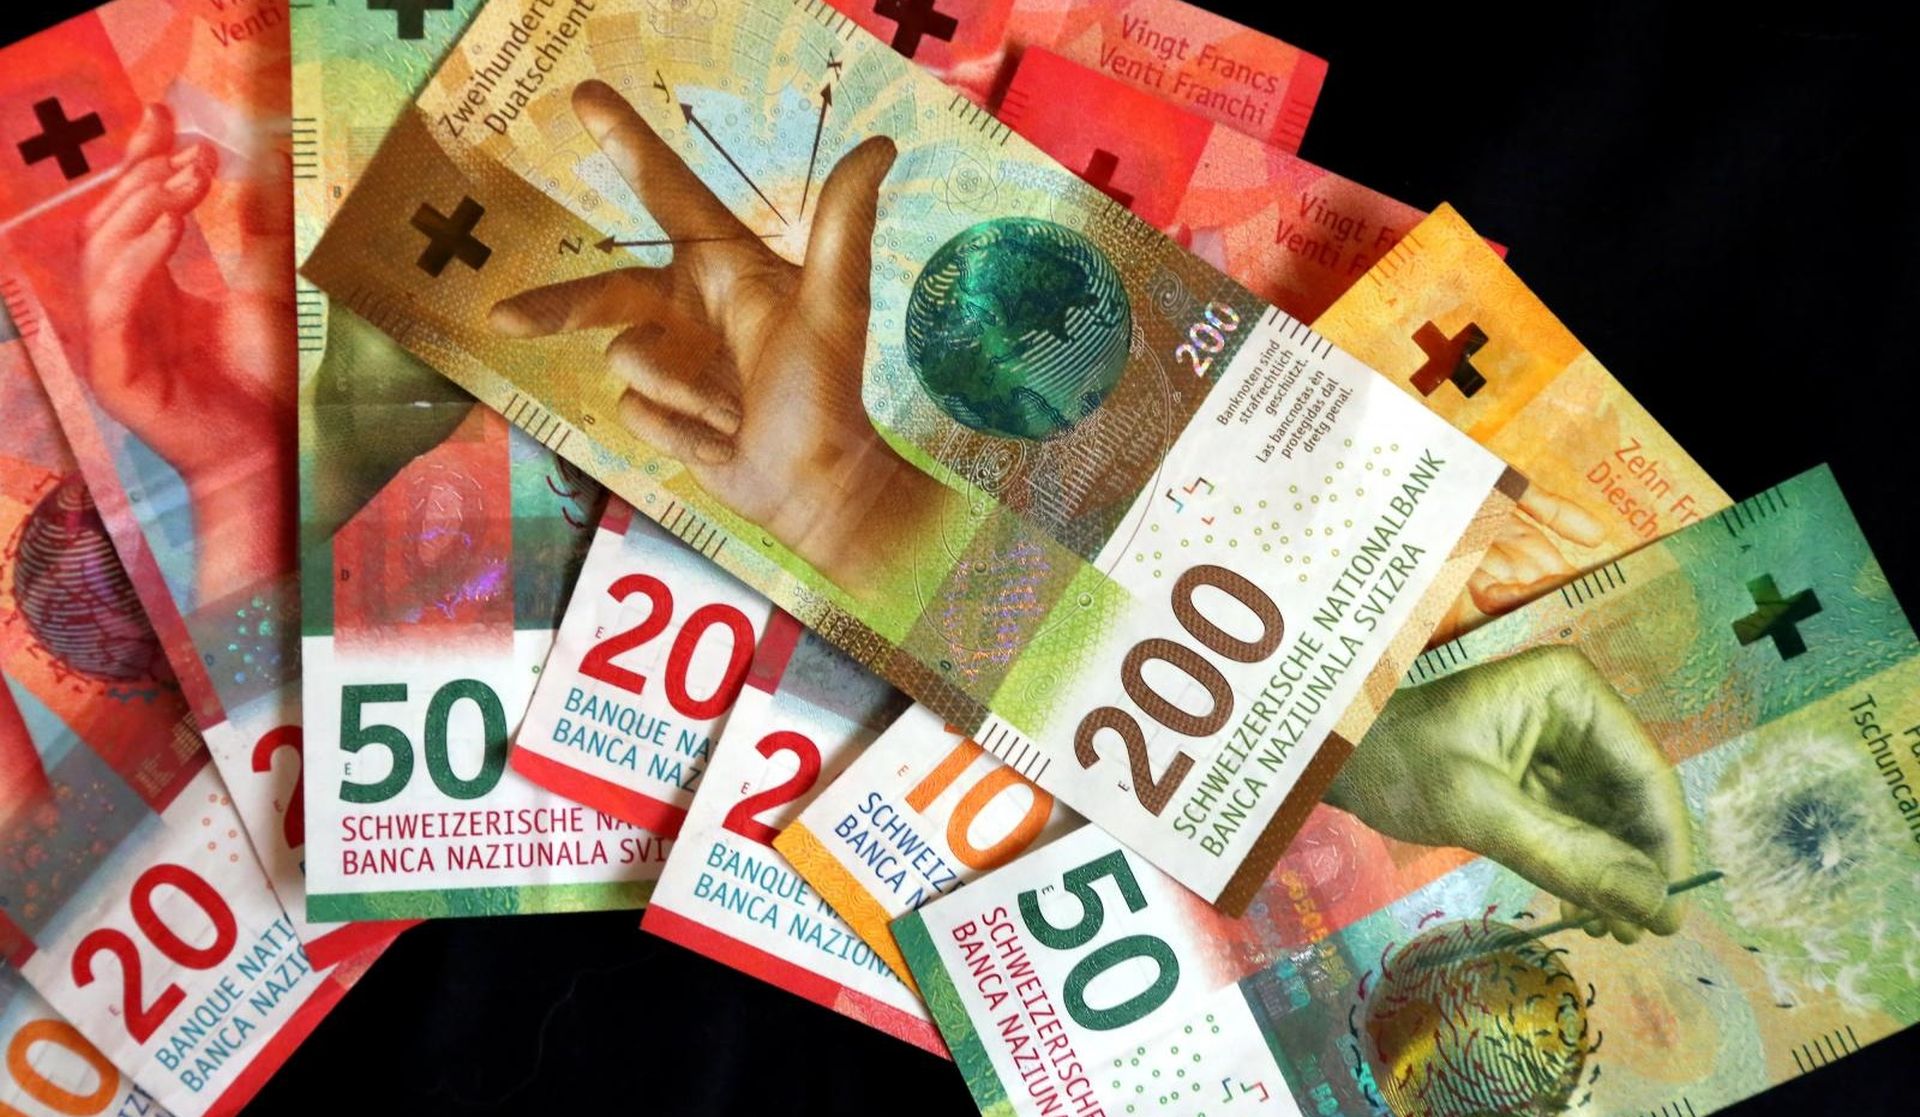 Tijekom 2018. godine Švicarska je pustila u opticaj nove papirnate novčanice švicarskog franka 14.01.2019., Sibenik - Od 2018. godine Svicarska je pustila u opticaj nove papirnate novcanice franka. Photo: Dusko Jaramaz/PIXSELL